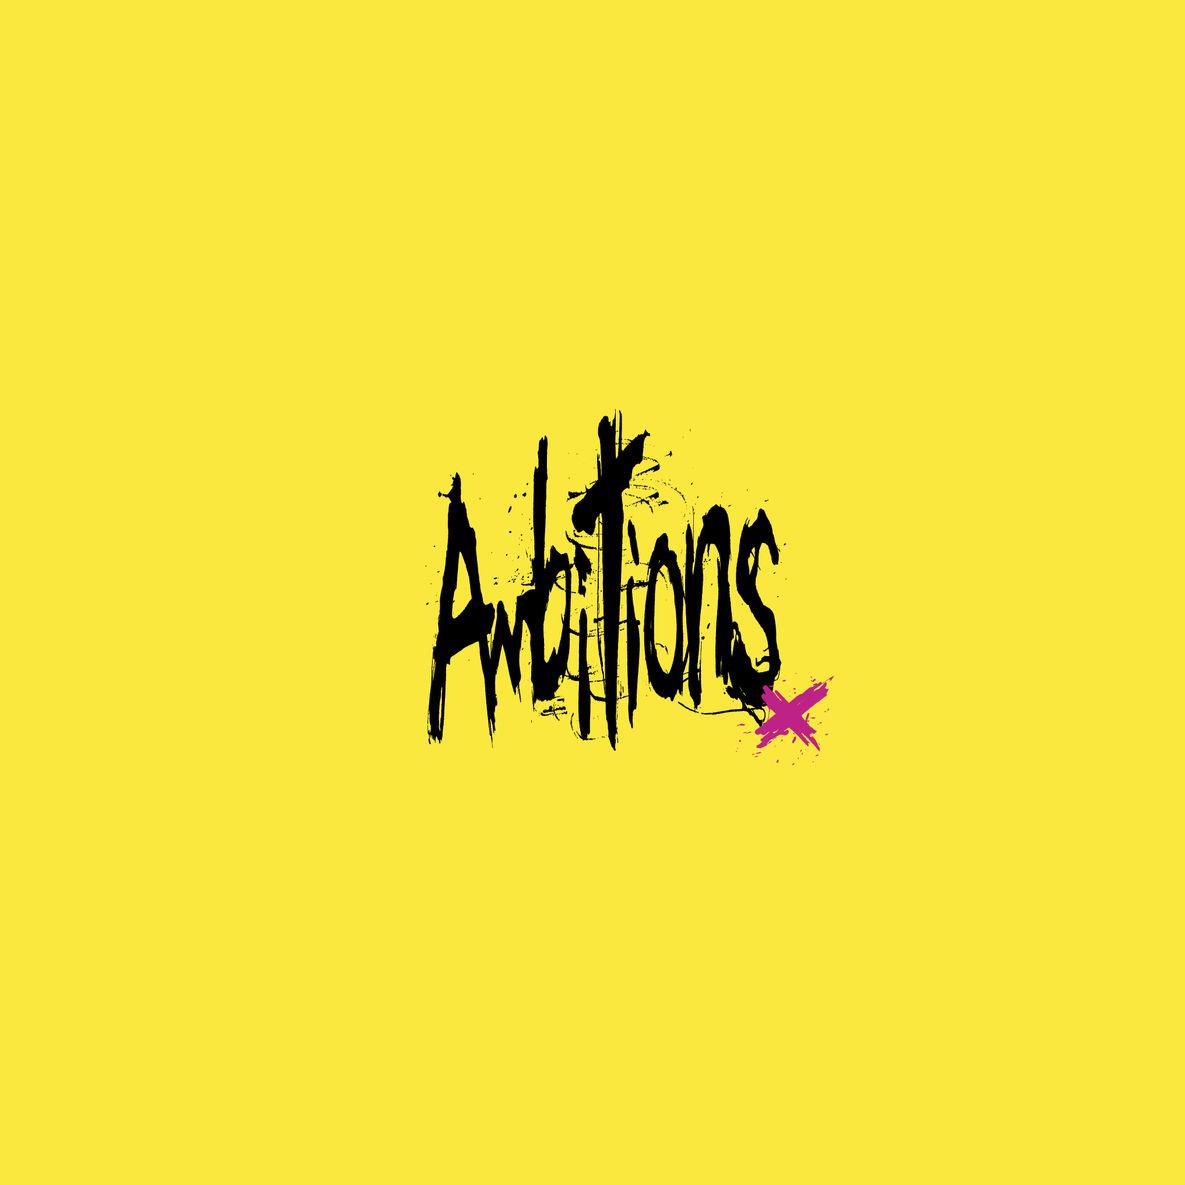 Listen歌词 歌手ONE OK ROCK / Avril Lavigne-专辑Ambitions [日本盤] - (壮志雄心)-单曲《Listen》LRC歌词下载